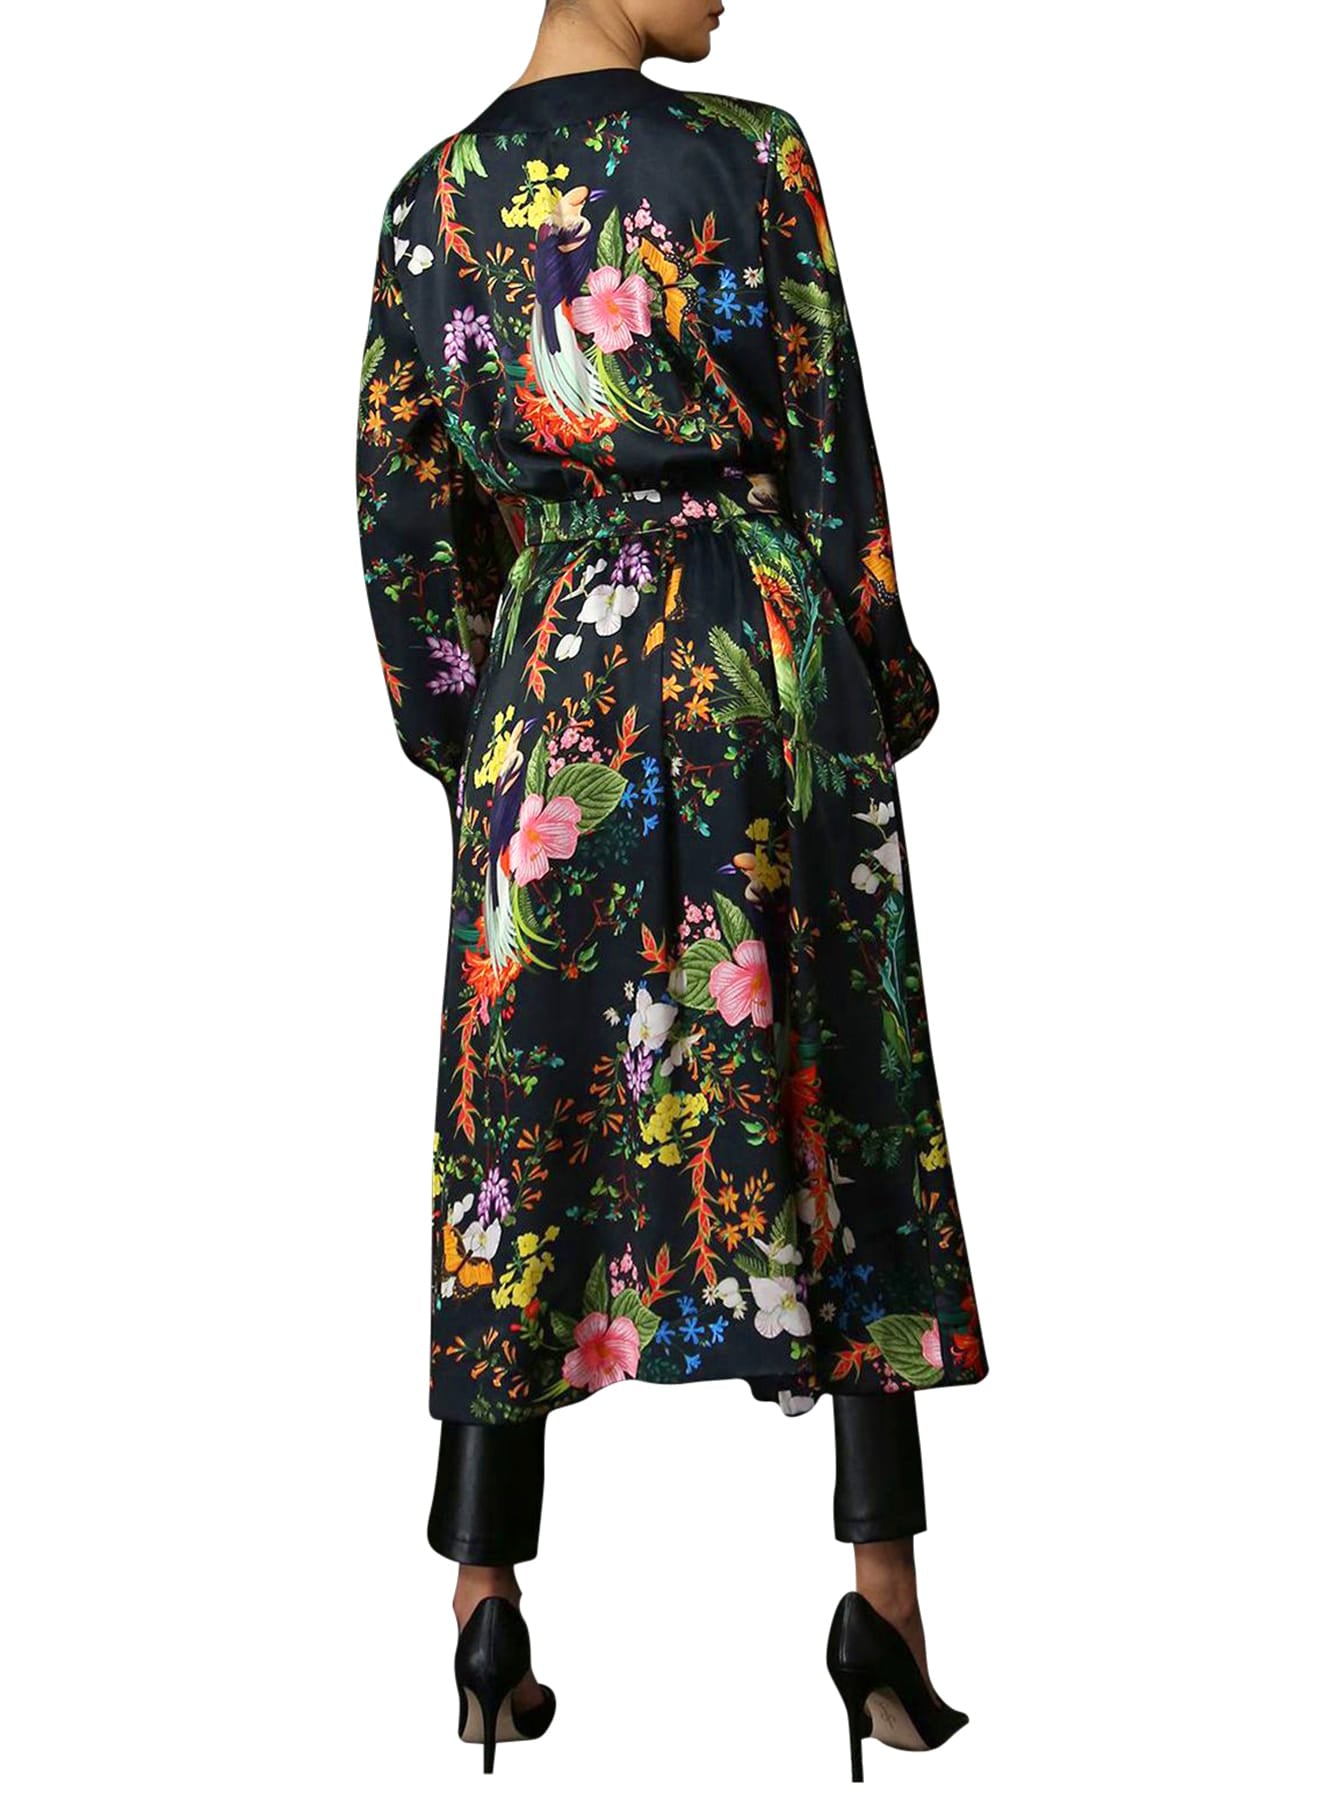 "Kyle X Shahida" "kimono silk robe women's" "printed silk robe" "beautiful kimono" "black silk robe"